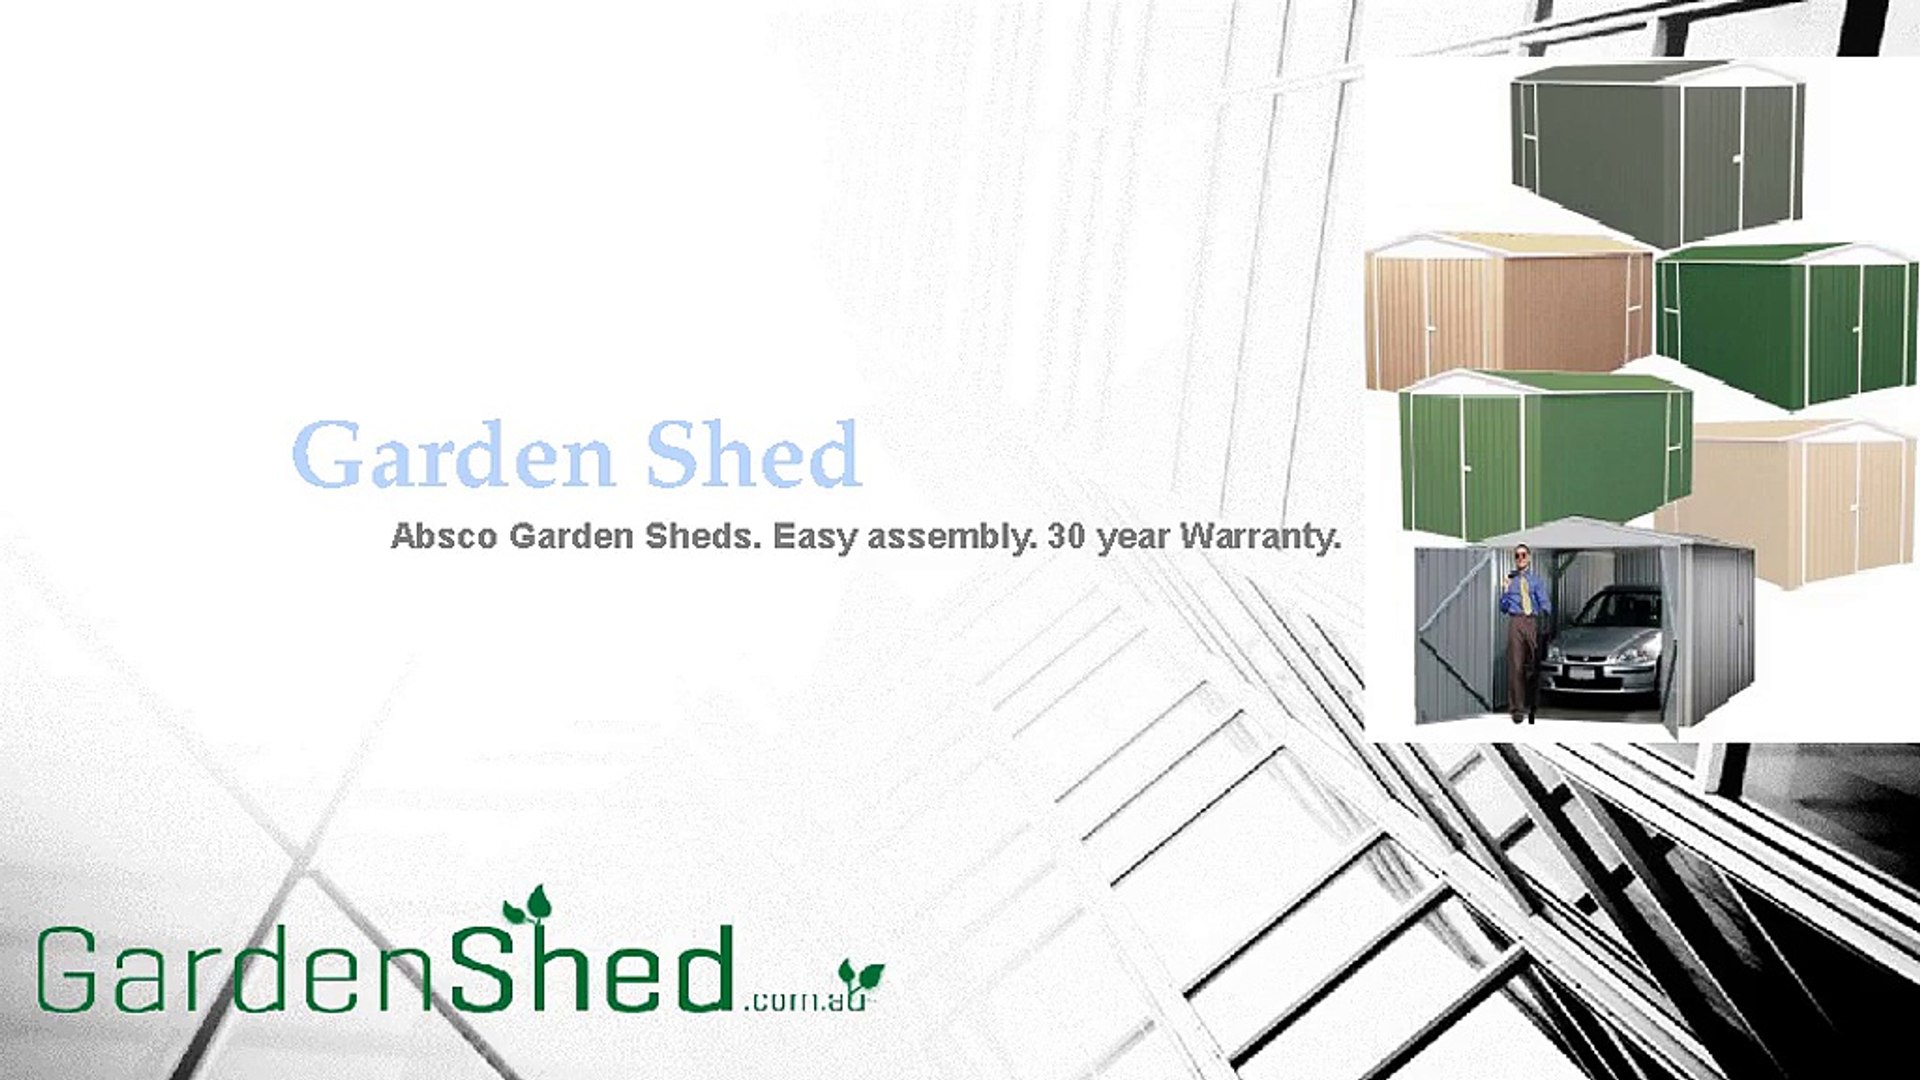 Buy Absco Garden Shed Online | Garden Shed